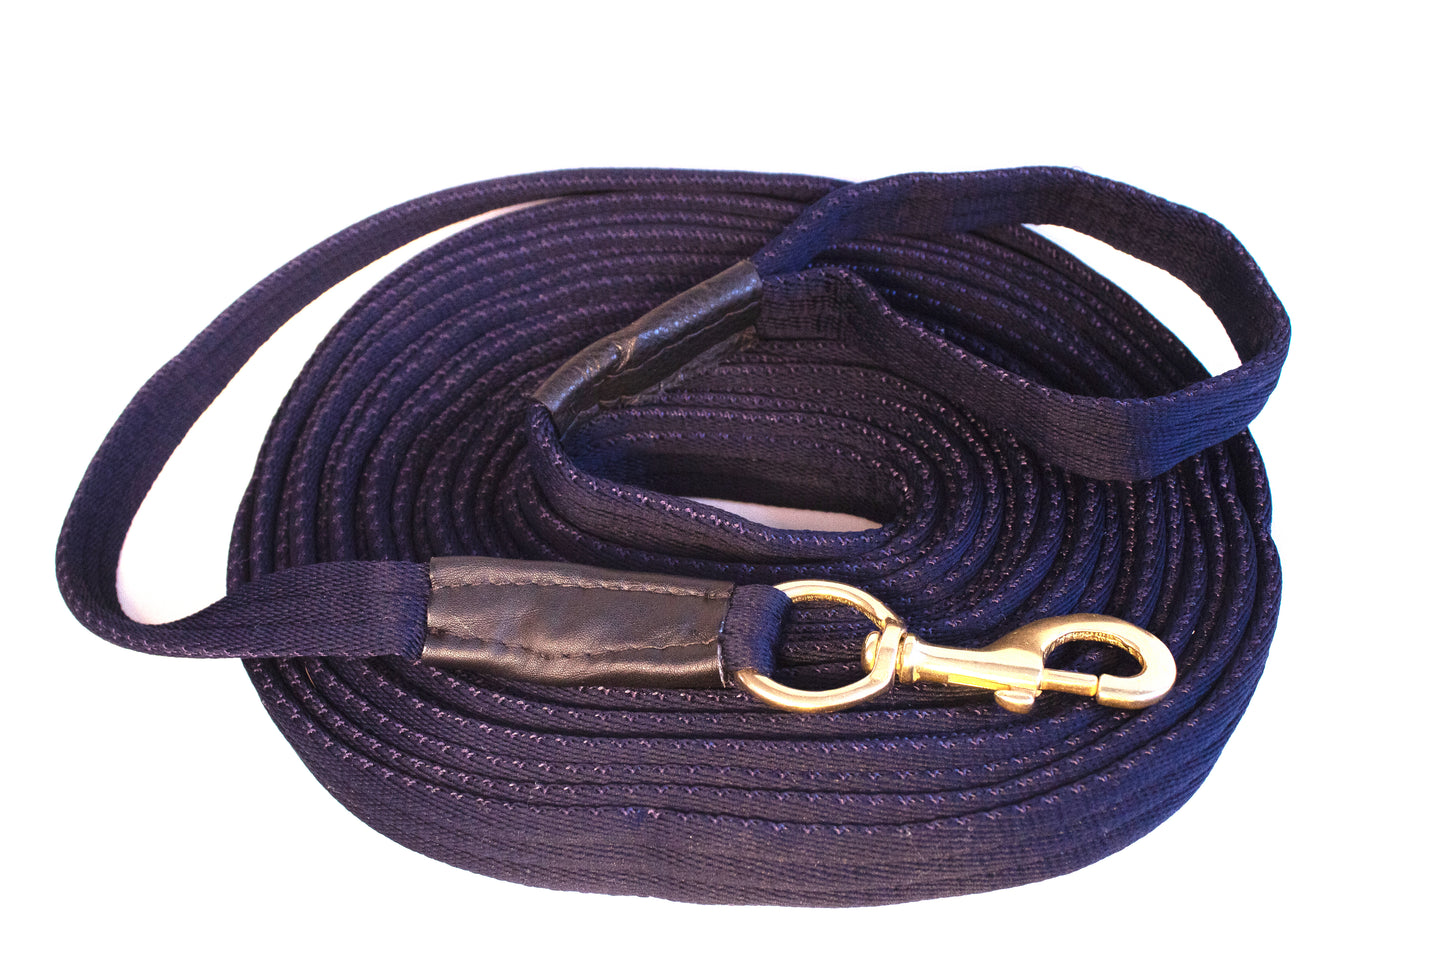 Longe line - Dark blue with leather comfortable handle